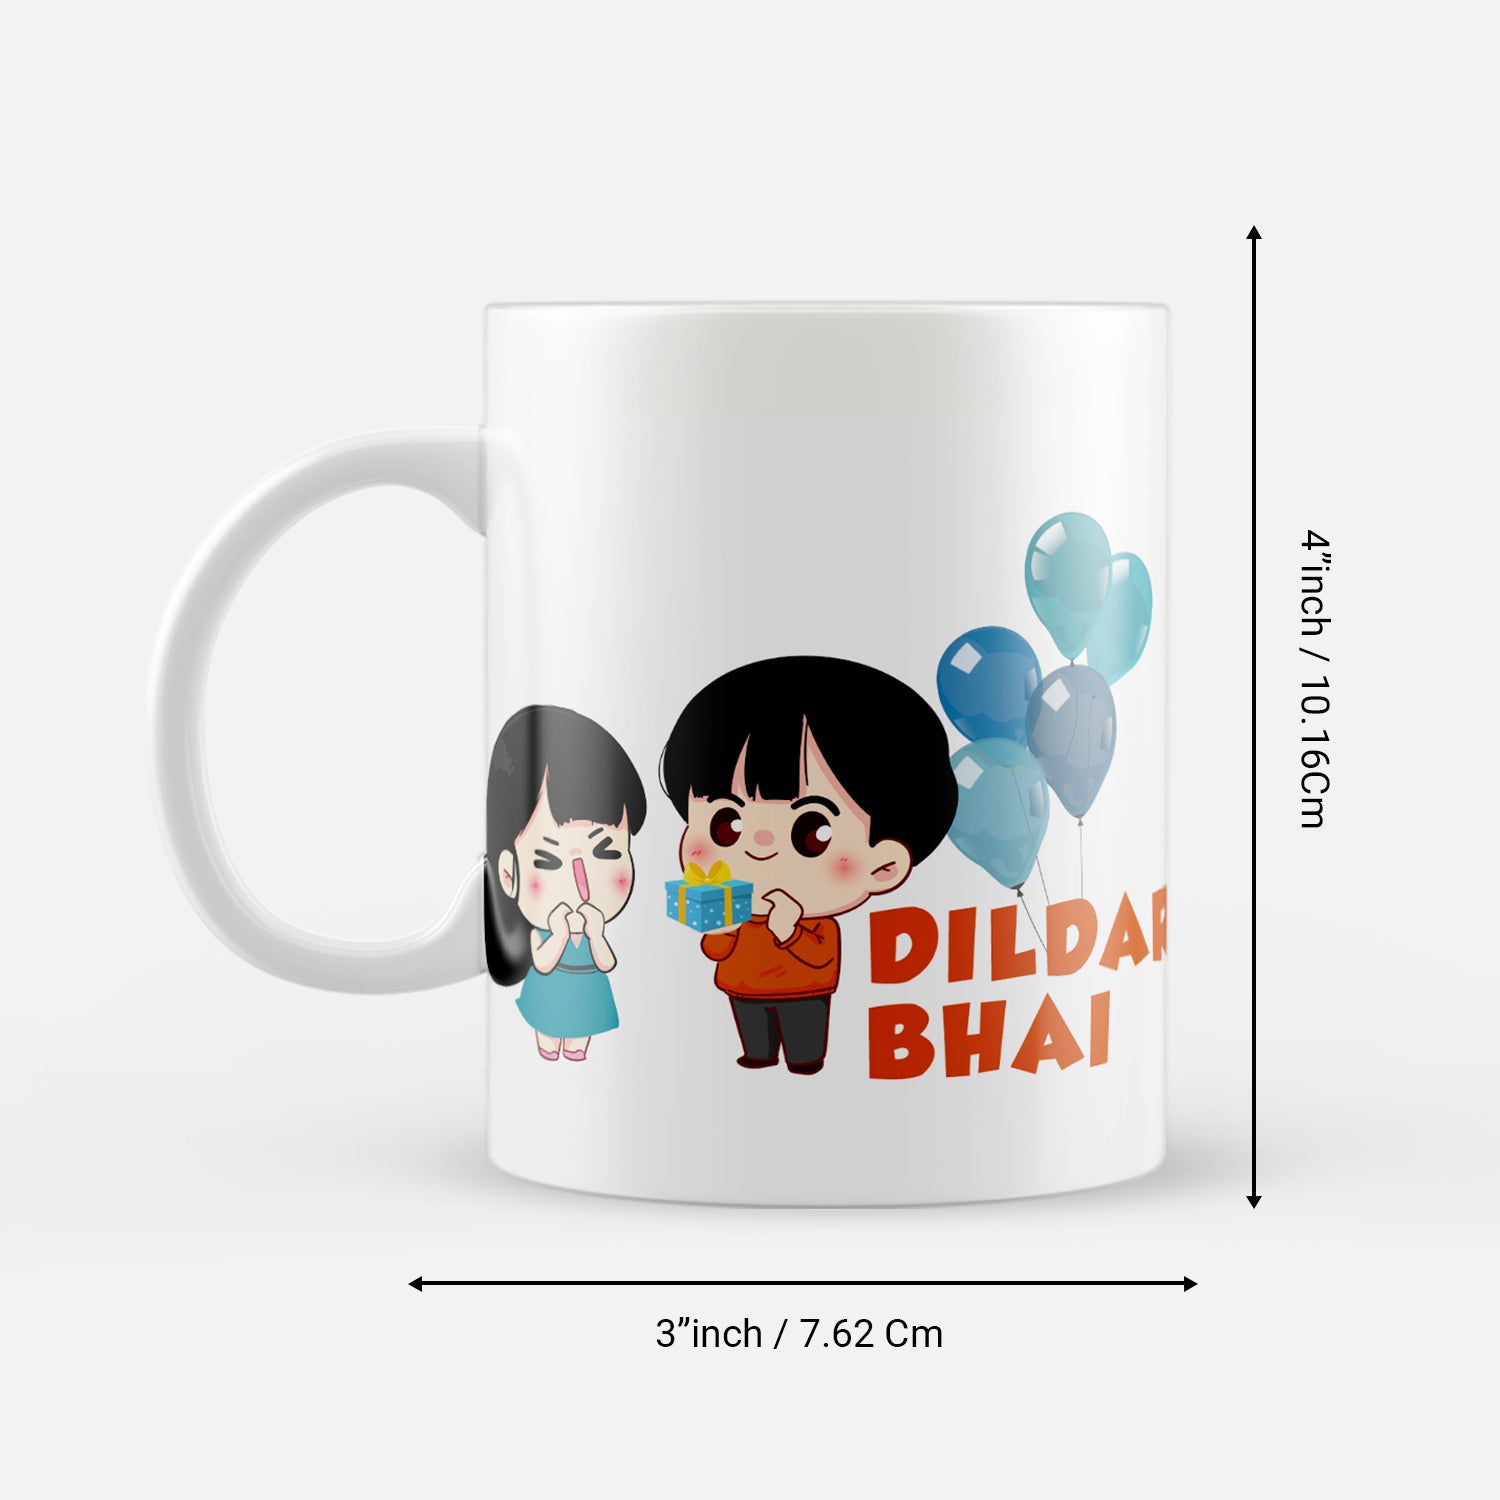 "Dildar Bhai" Brother Ceramic Coffee/Tea Mug 3